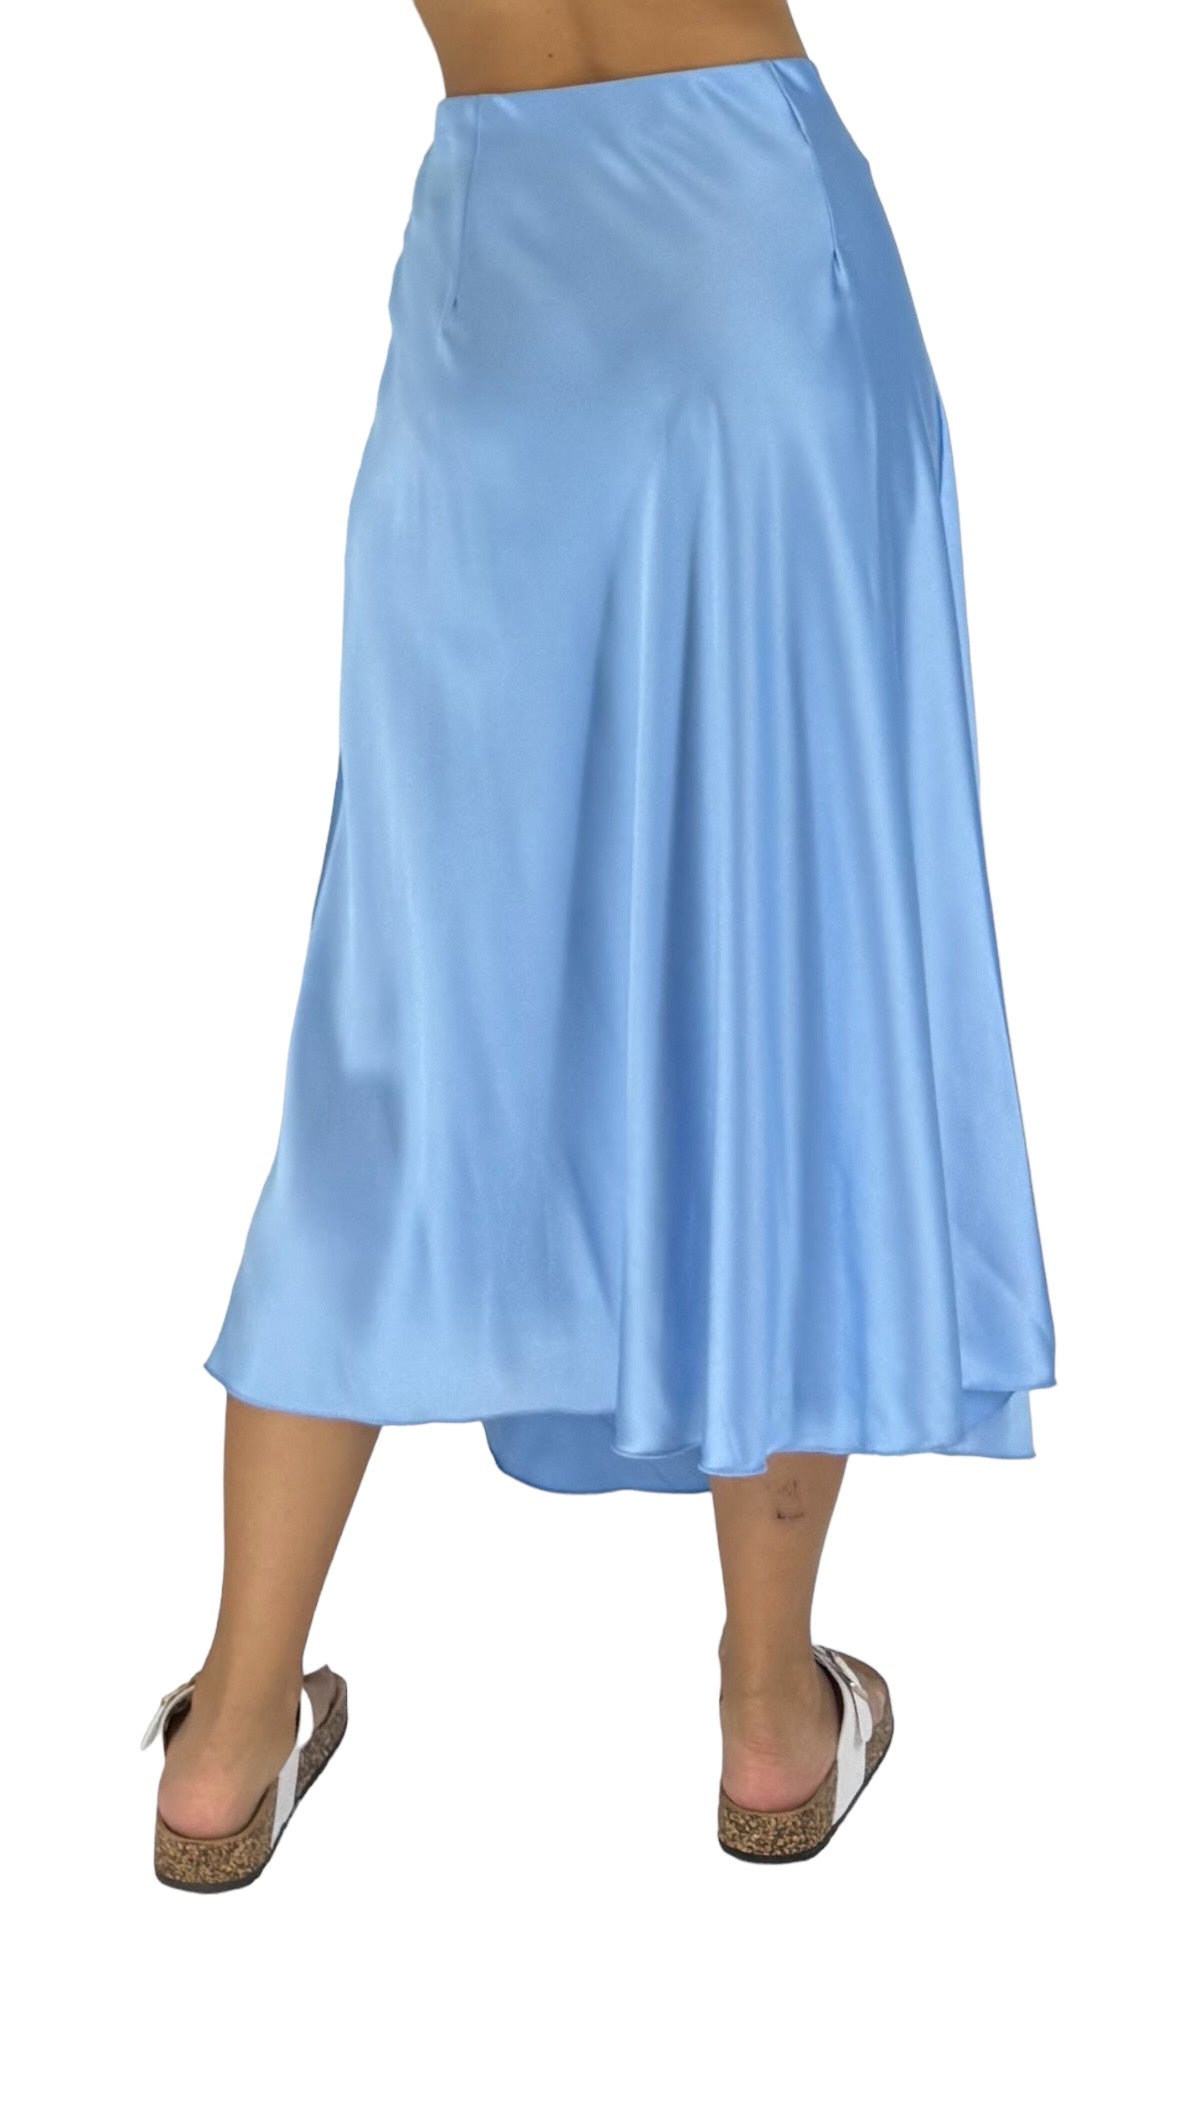 Roxy blue skirt